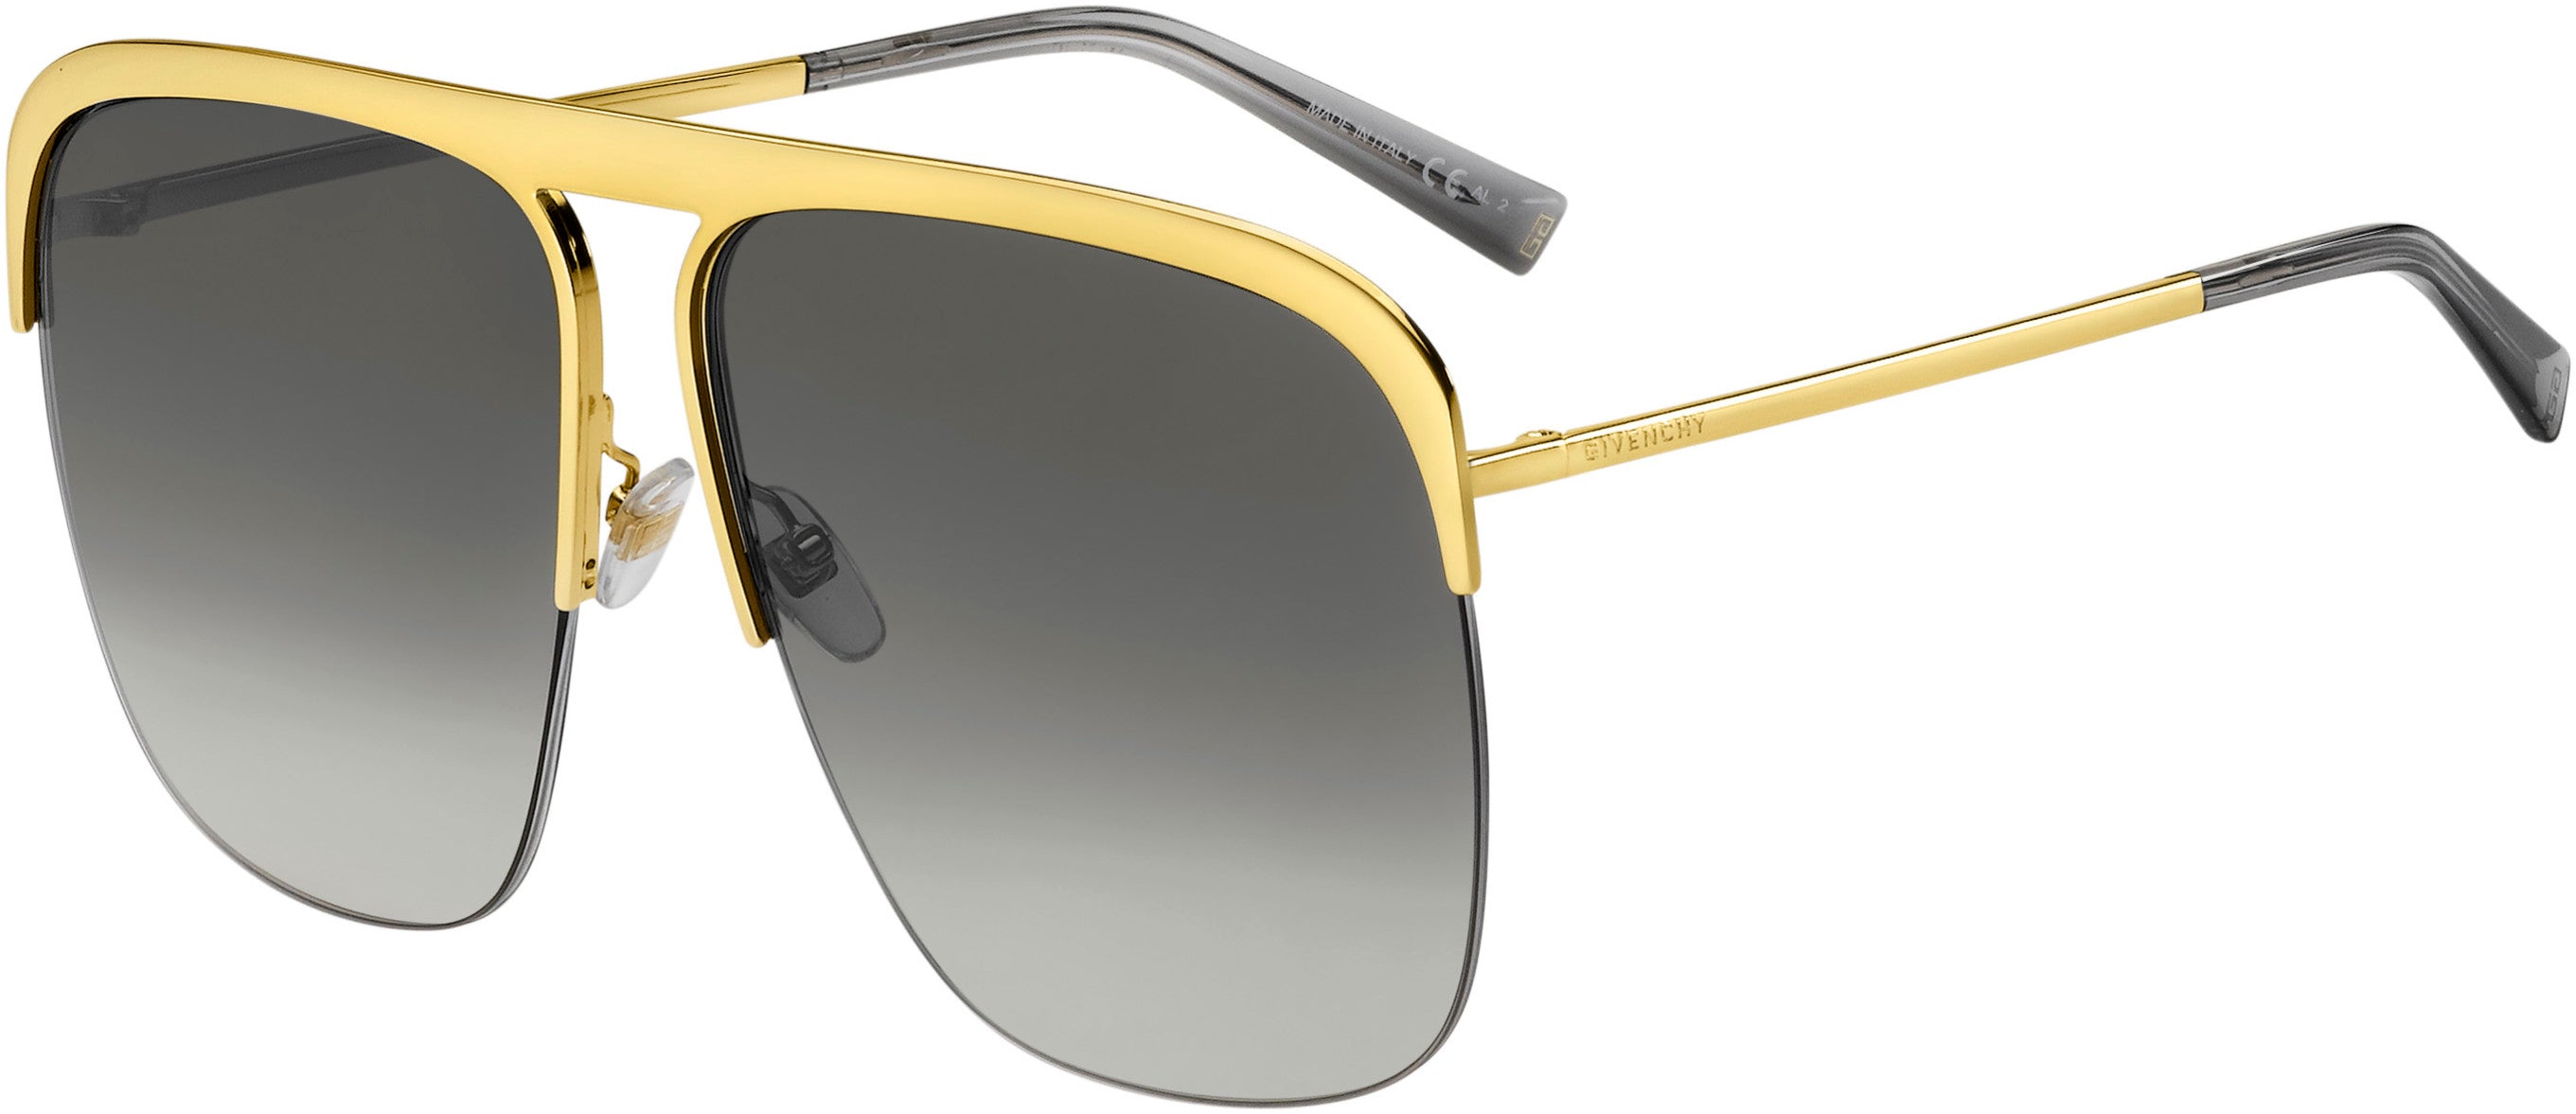  Givenchy 7173/S Square Sunglasses 0J5G-0J5G  Gold (9O Dark Gray Gradient)